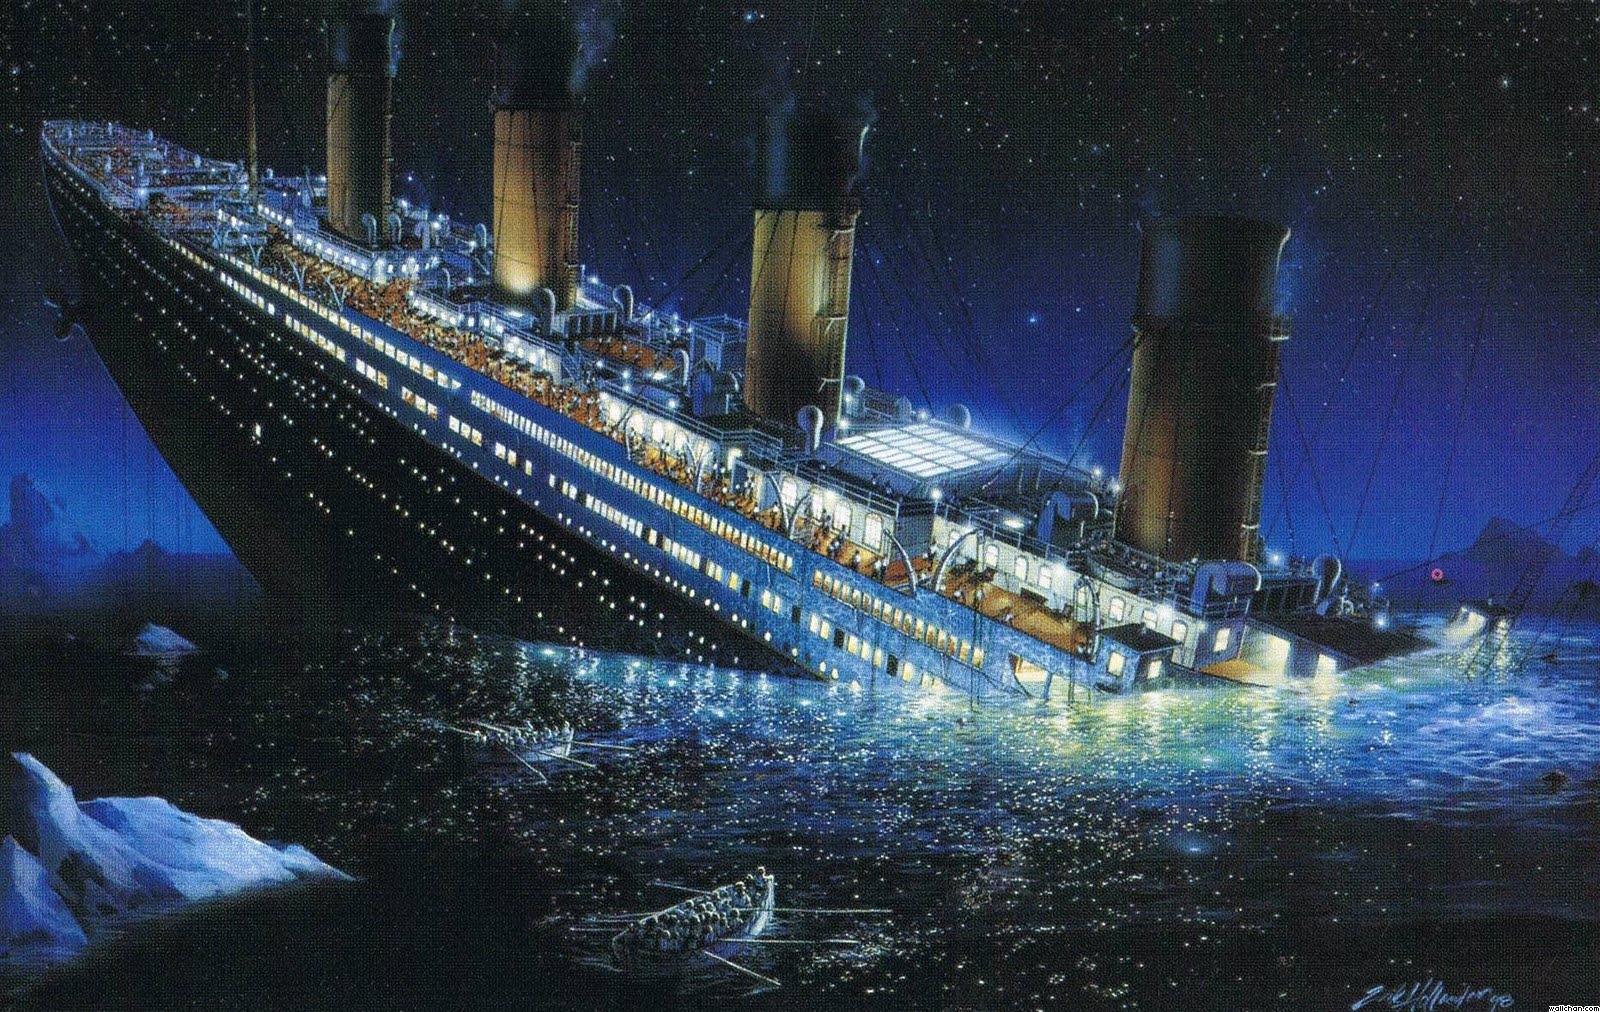 49+] Titanic Wallpapers Free Download - WallpaperSafari